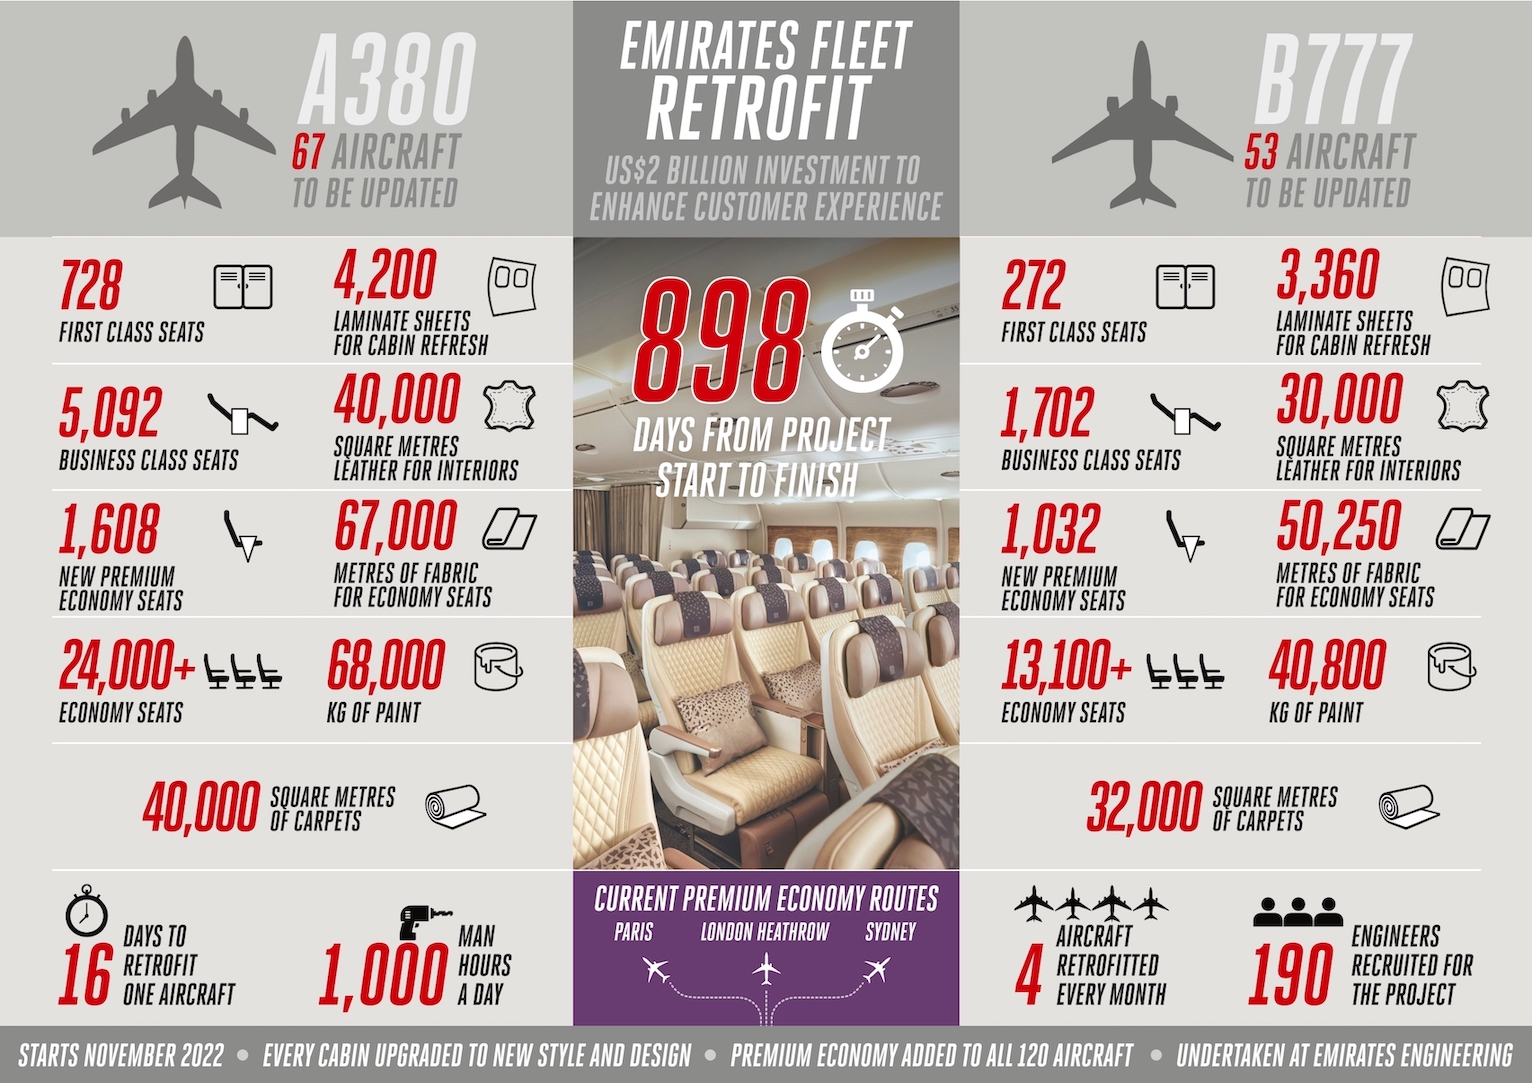 Emirates fleet retrofit project 8